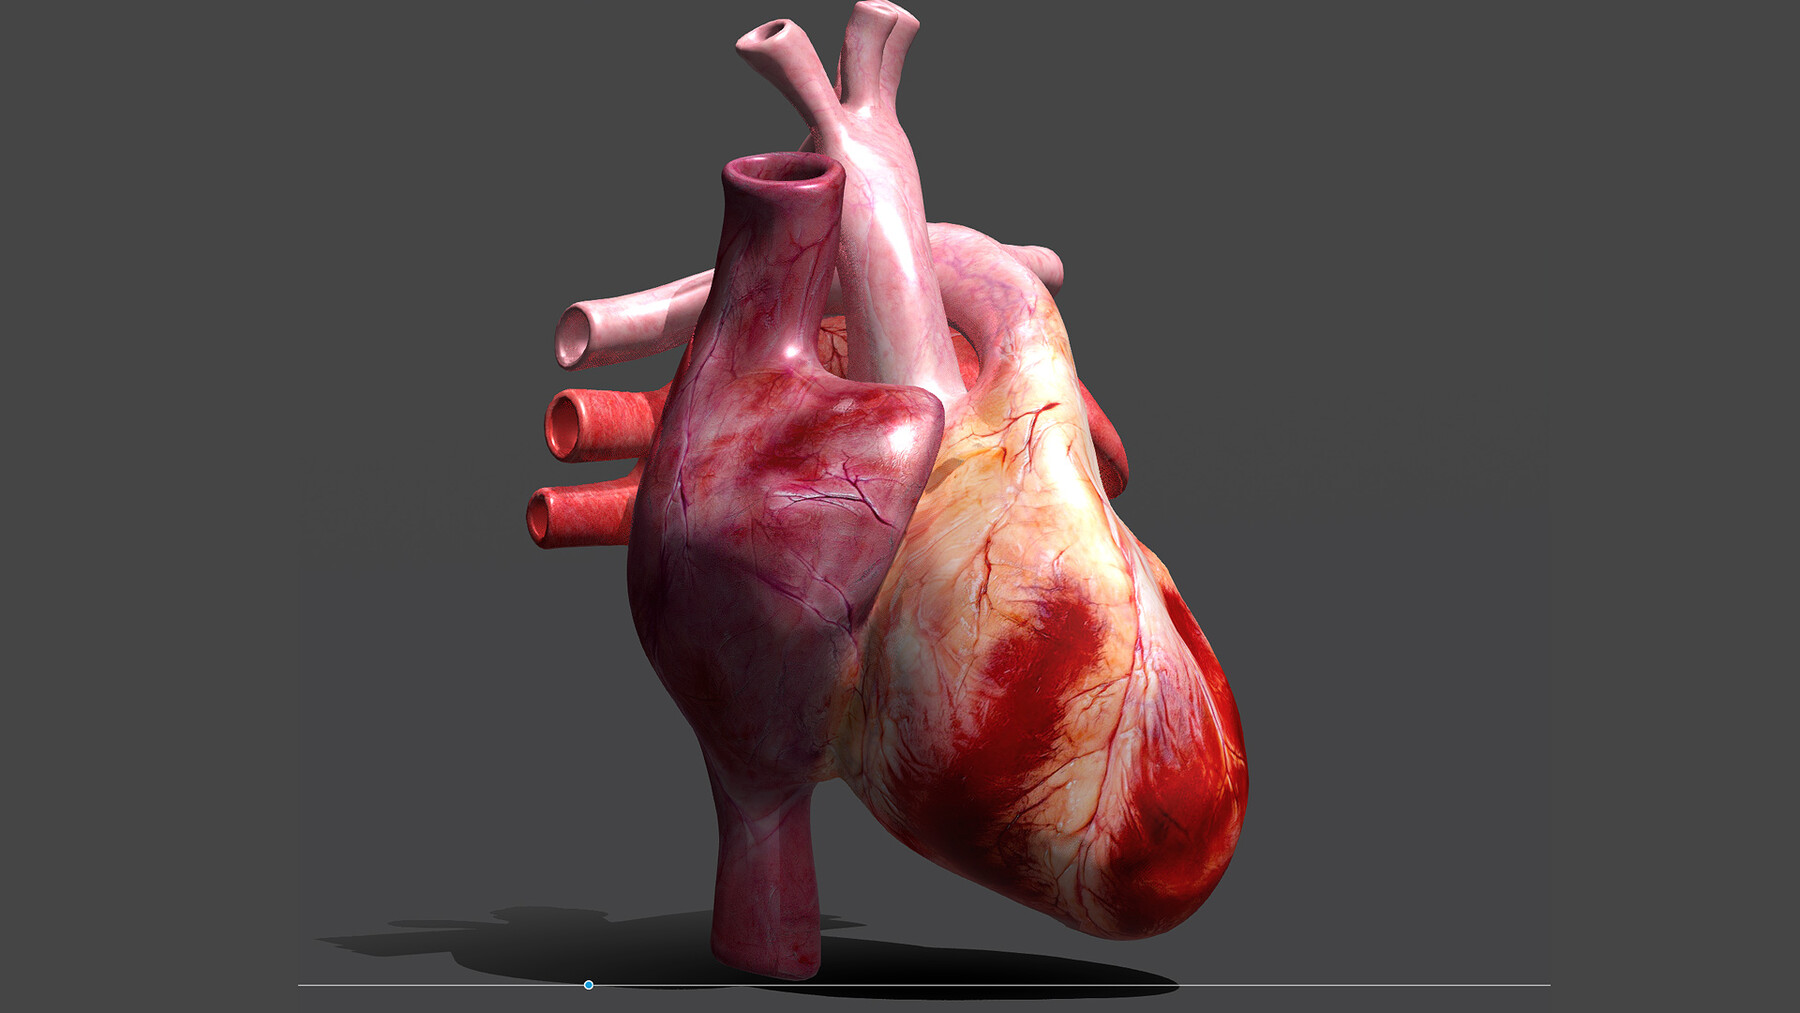 ArtStation - Heart Animation Human Body Anatomy | Game Assets